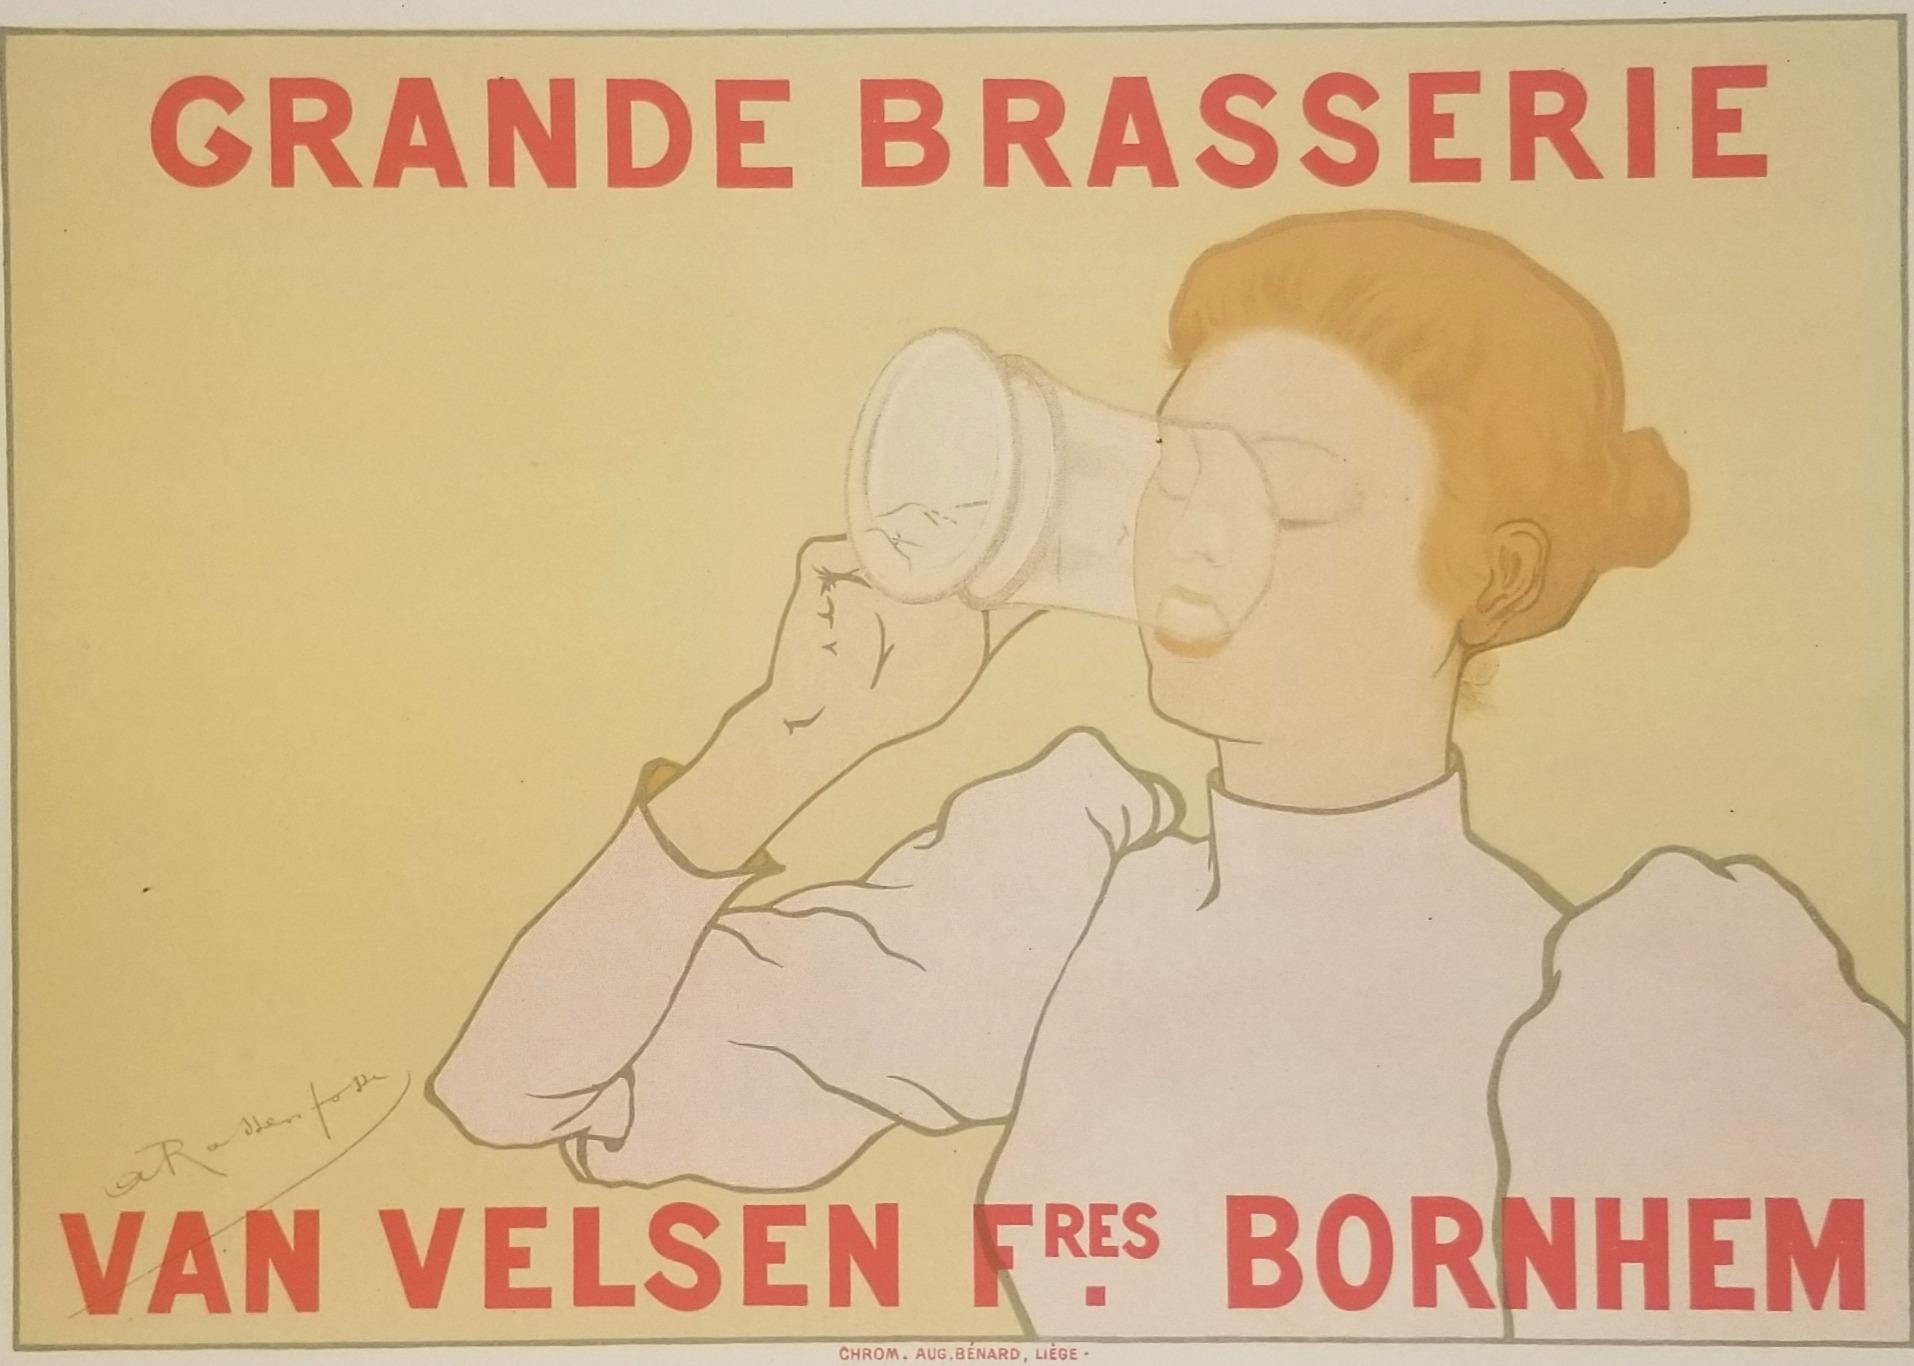 Armand Rassenfosse Print - Grande Brasserie Van Velsen frères Bornhem 